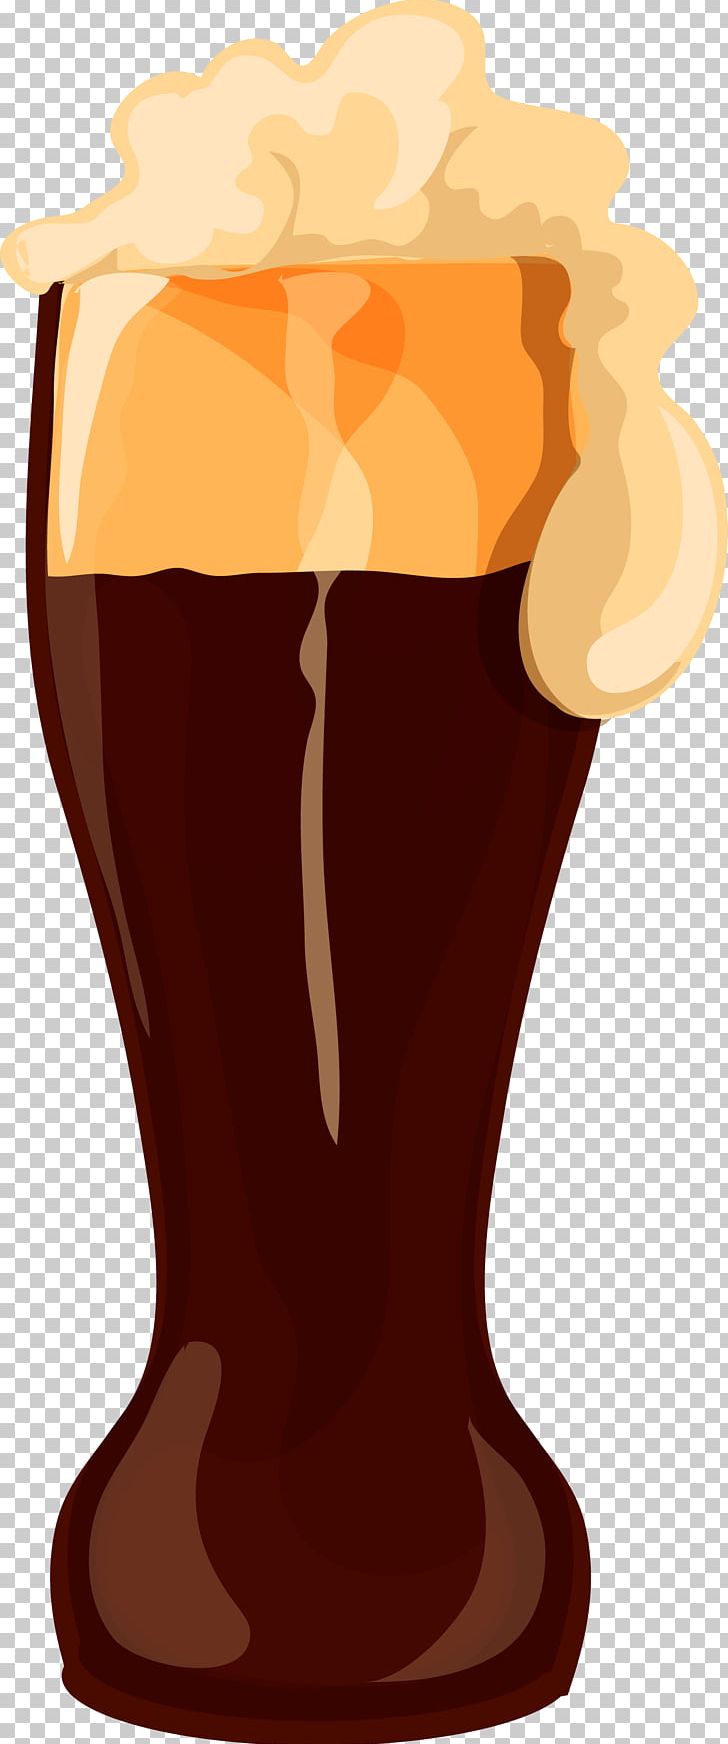 Beer Tankard PNG, Clipart, Adobe Illustrator, Beer, Beer Mug, Broken Glass, Brown Free PNG Download